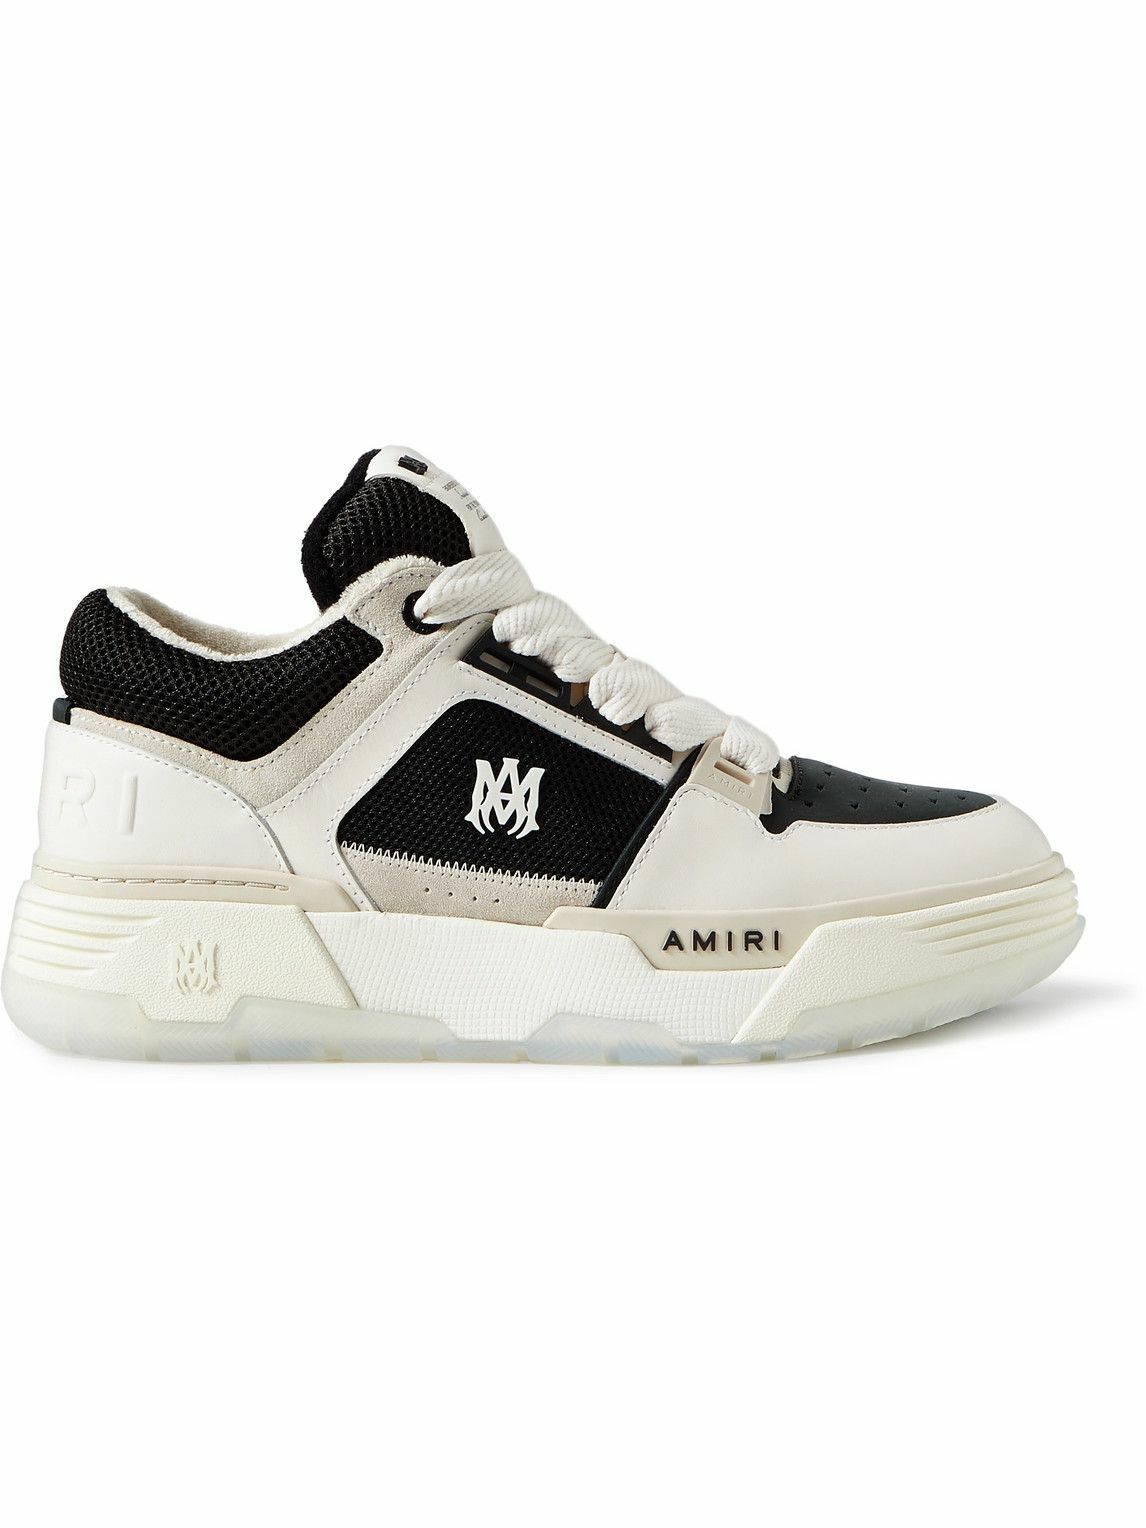 AMIRI - MA-1 Leather, Suede and Mesh Sneakers - White Amiri